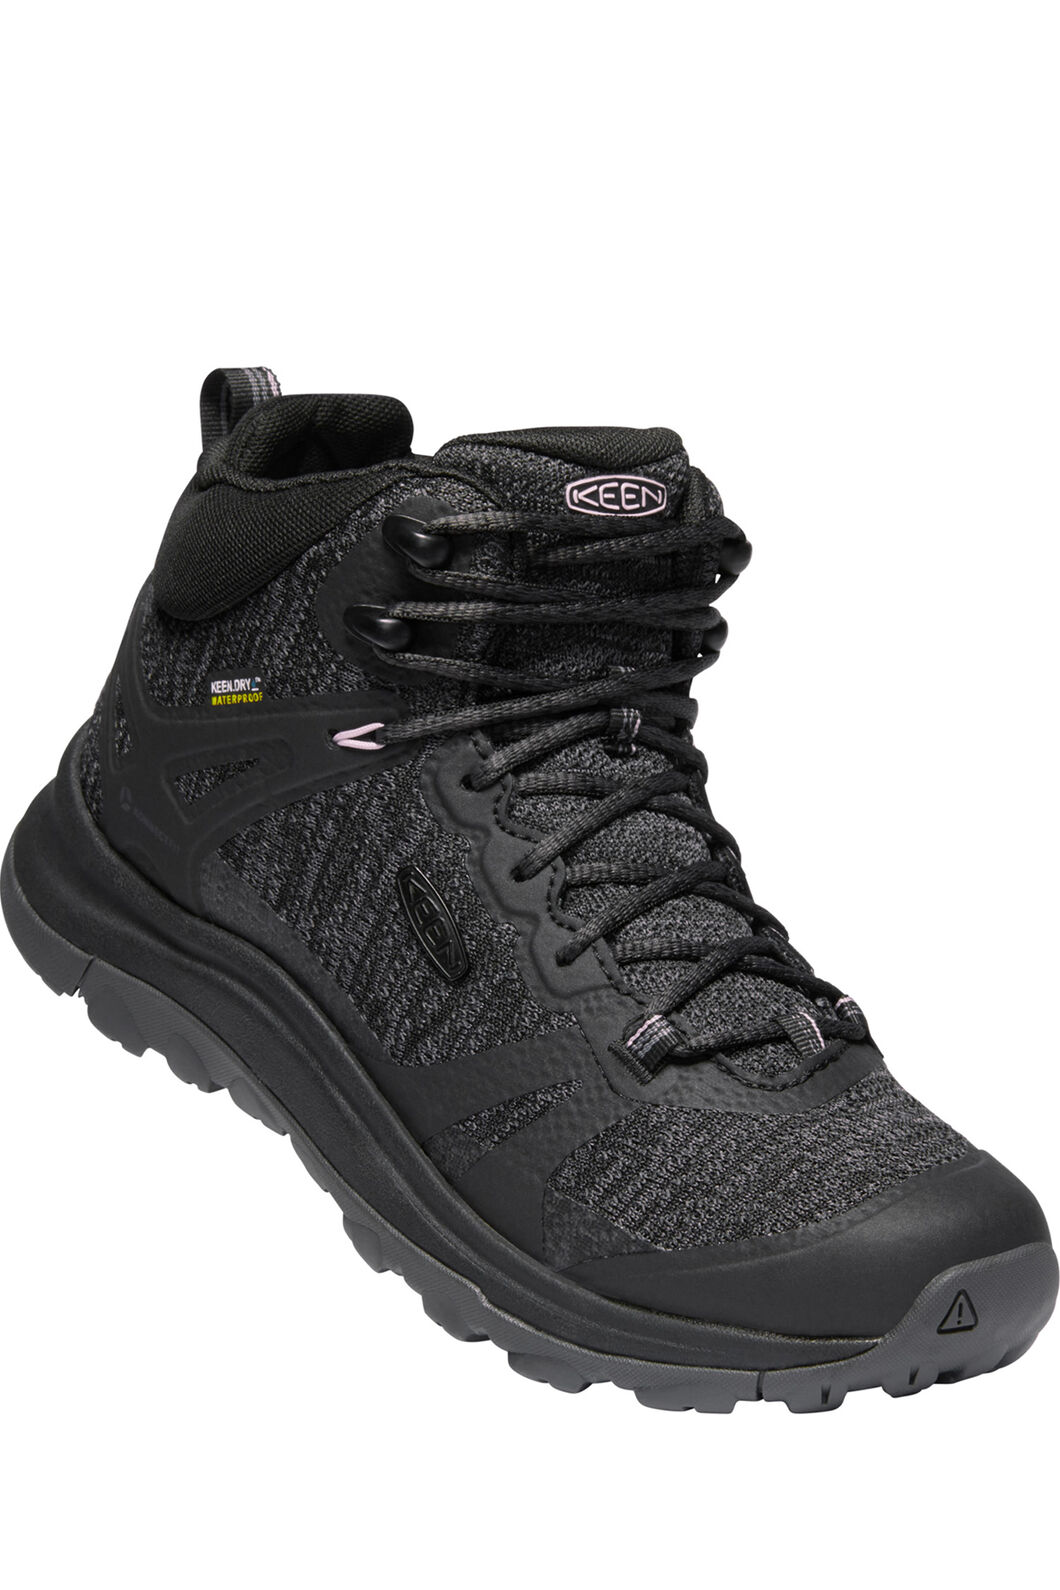 Keen Women's Terradora II Mid WP Hiking Boots, Black Magnet, hi-res